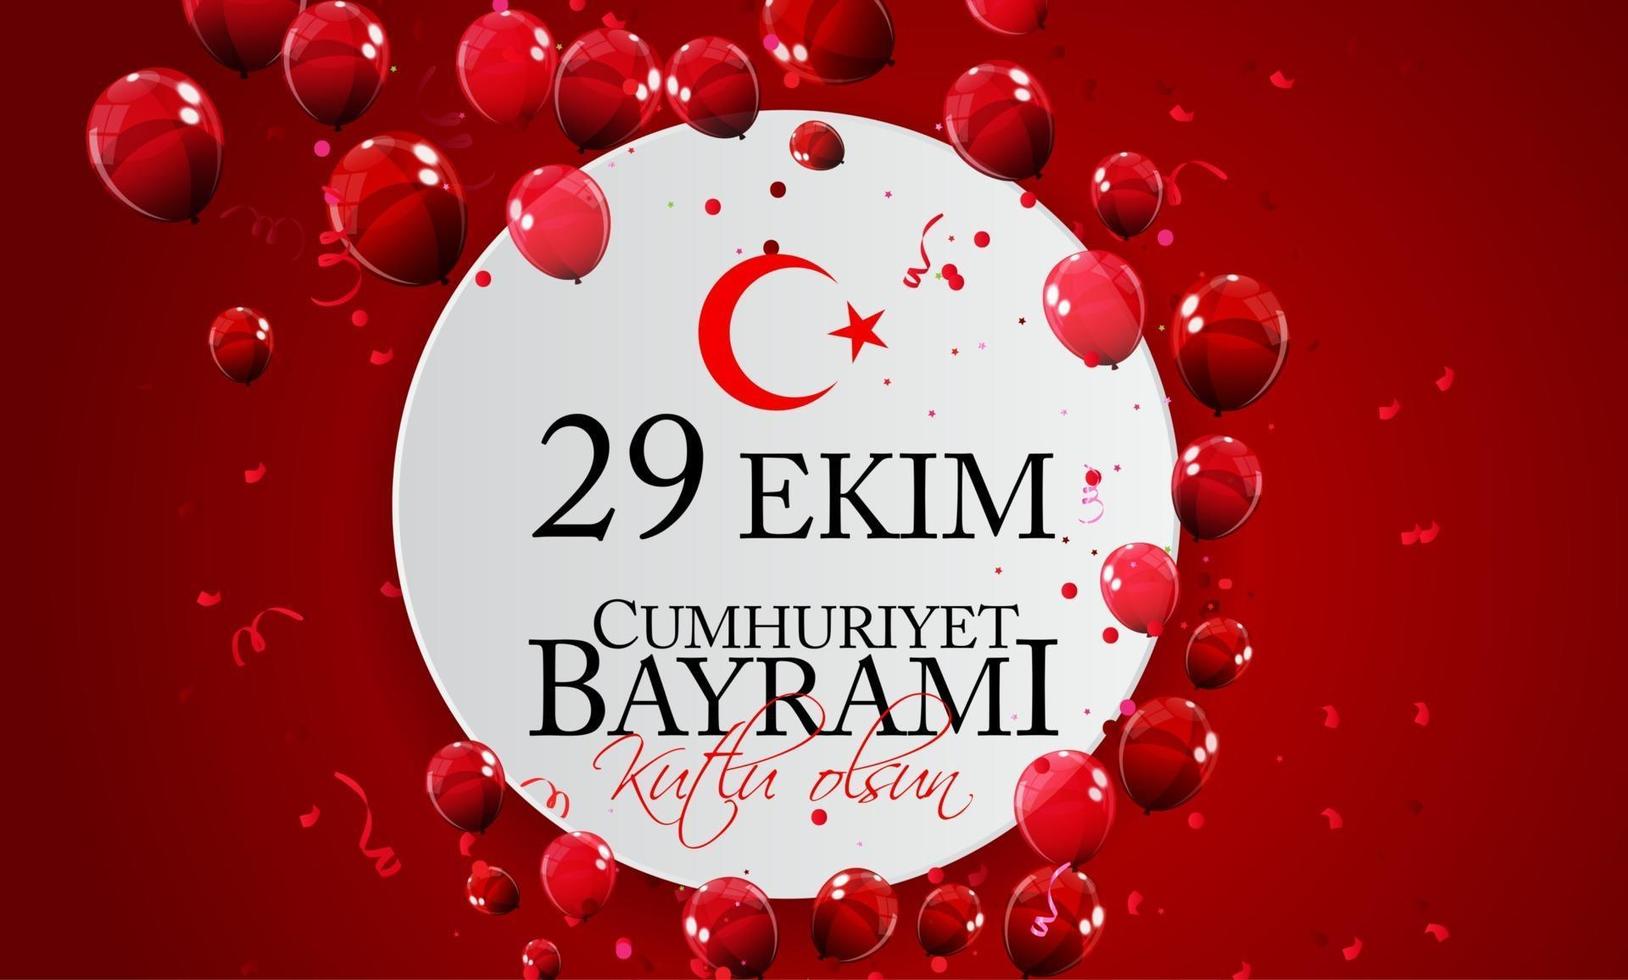 29 Ekim Cumhuriyet Bayrami kutlu olsun. Translation 29 october Republic Day Turkey and the National Day in Turkey, Happy holiday vector